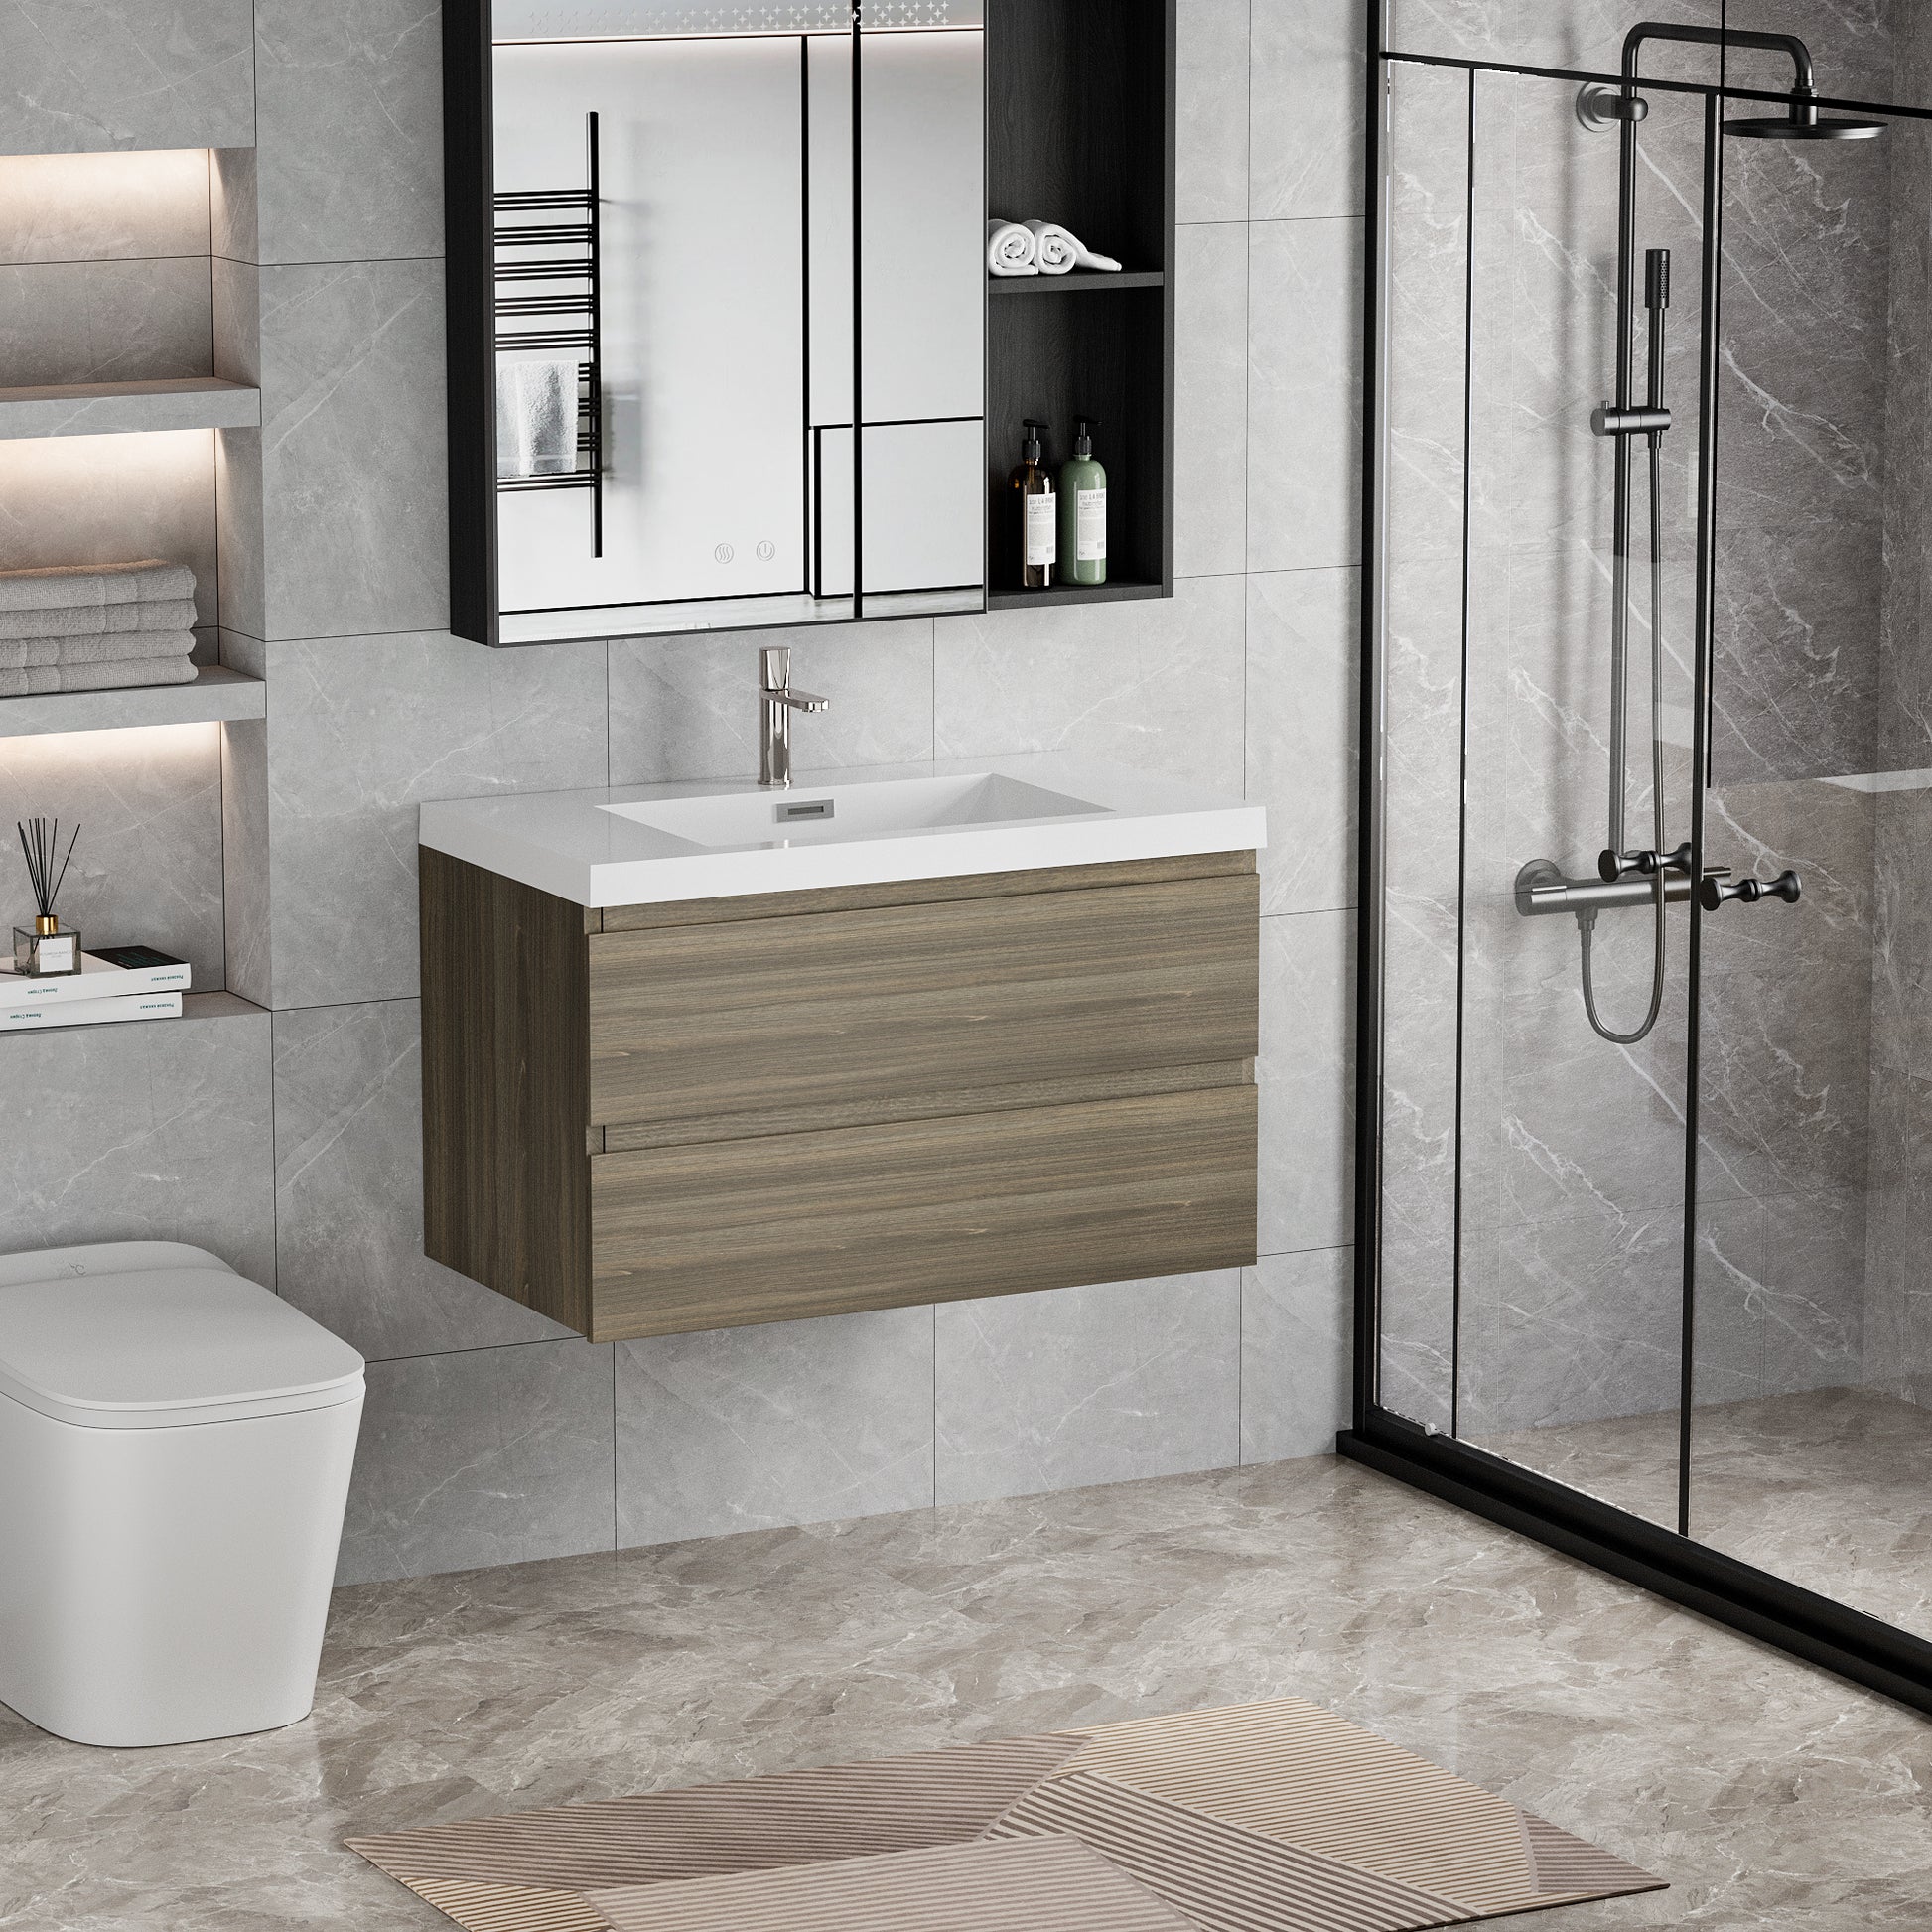 36" Floating Bathroom Vanity with Sink, Modern Wall 2-grey-bathroom-wall mounted-melamine